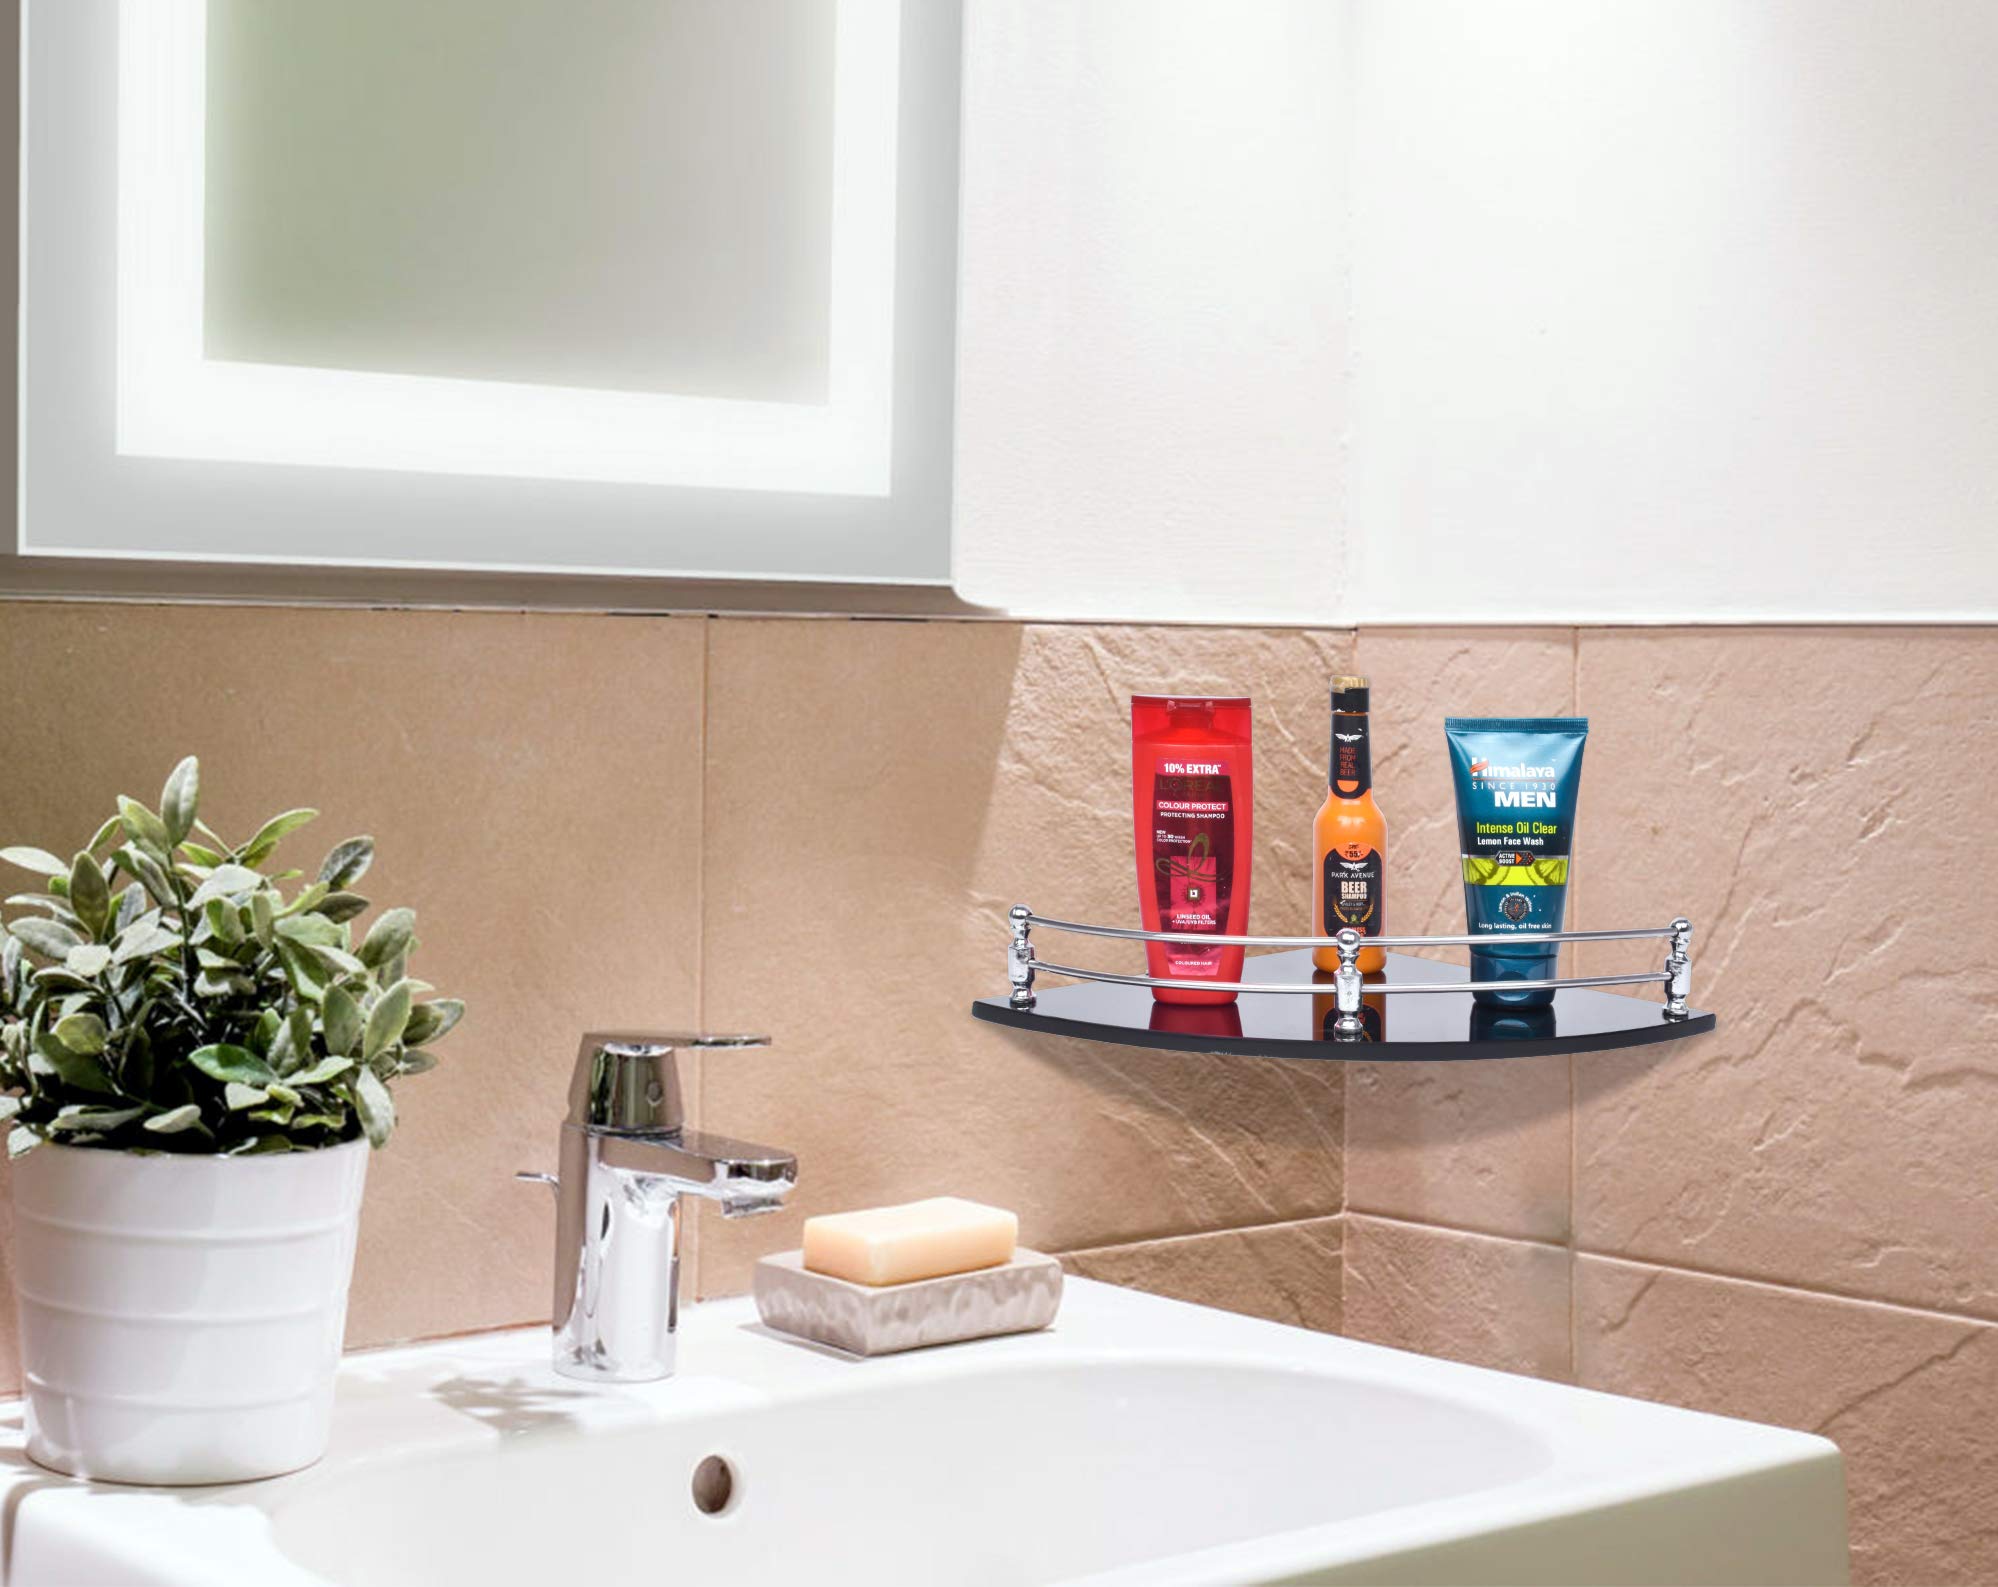 Plantex Premium Black Glass Corner Shelf for Bathroom/Wall Shelf/Storage Shelf (9 x 9 Inches - Pack of 3)